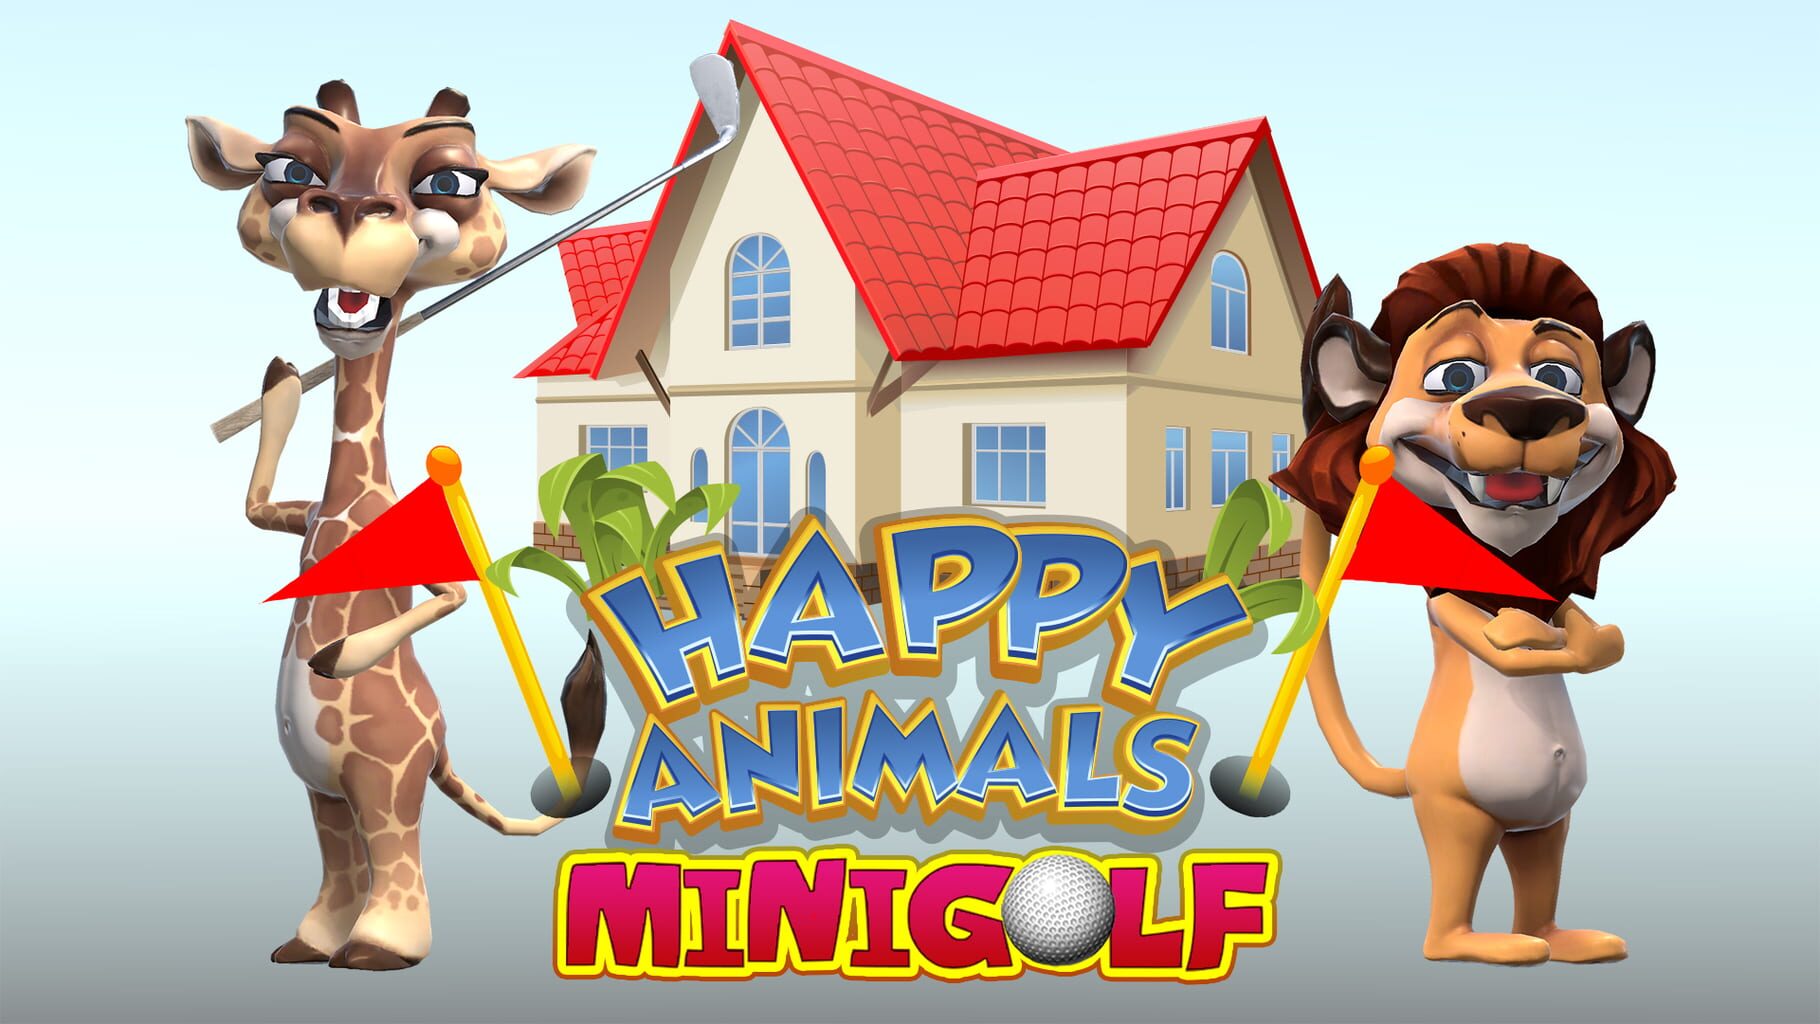 Happy Animals Mini Golf artwork